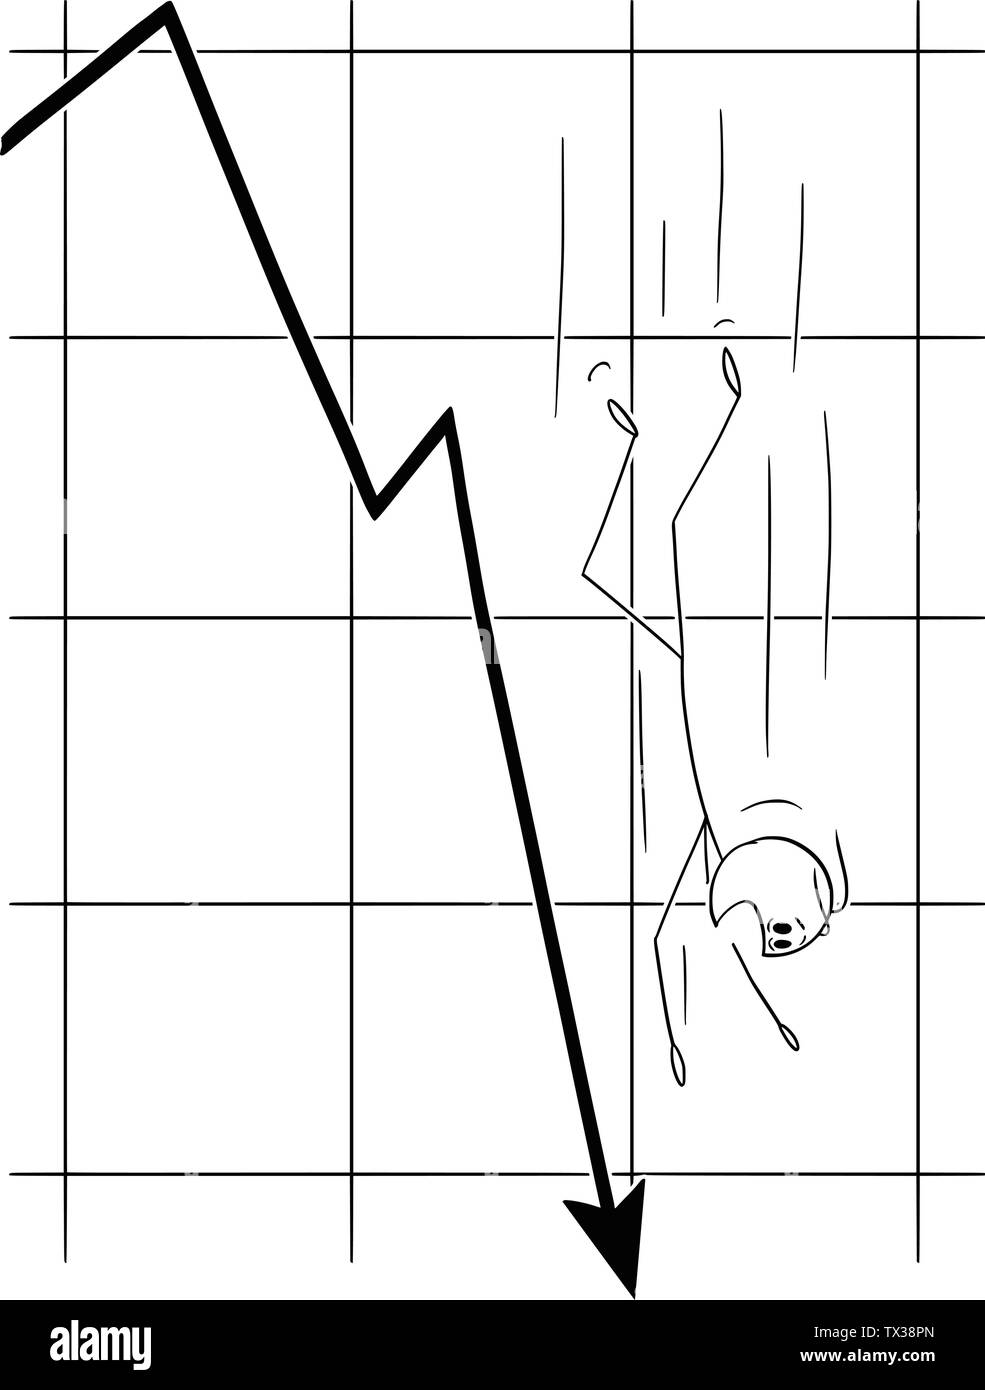 Vector cartoon stick figure drawing conceptual illustration of man or businessman falling down along the graph arrow. Business metaphor of crisis. Stock Vector